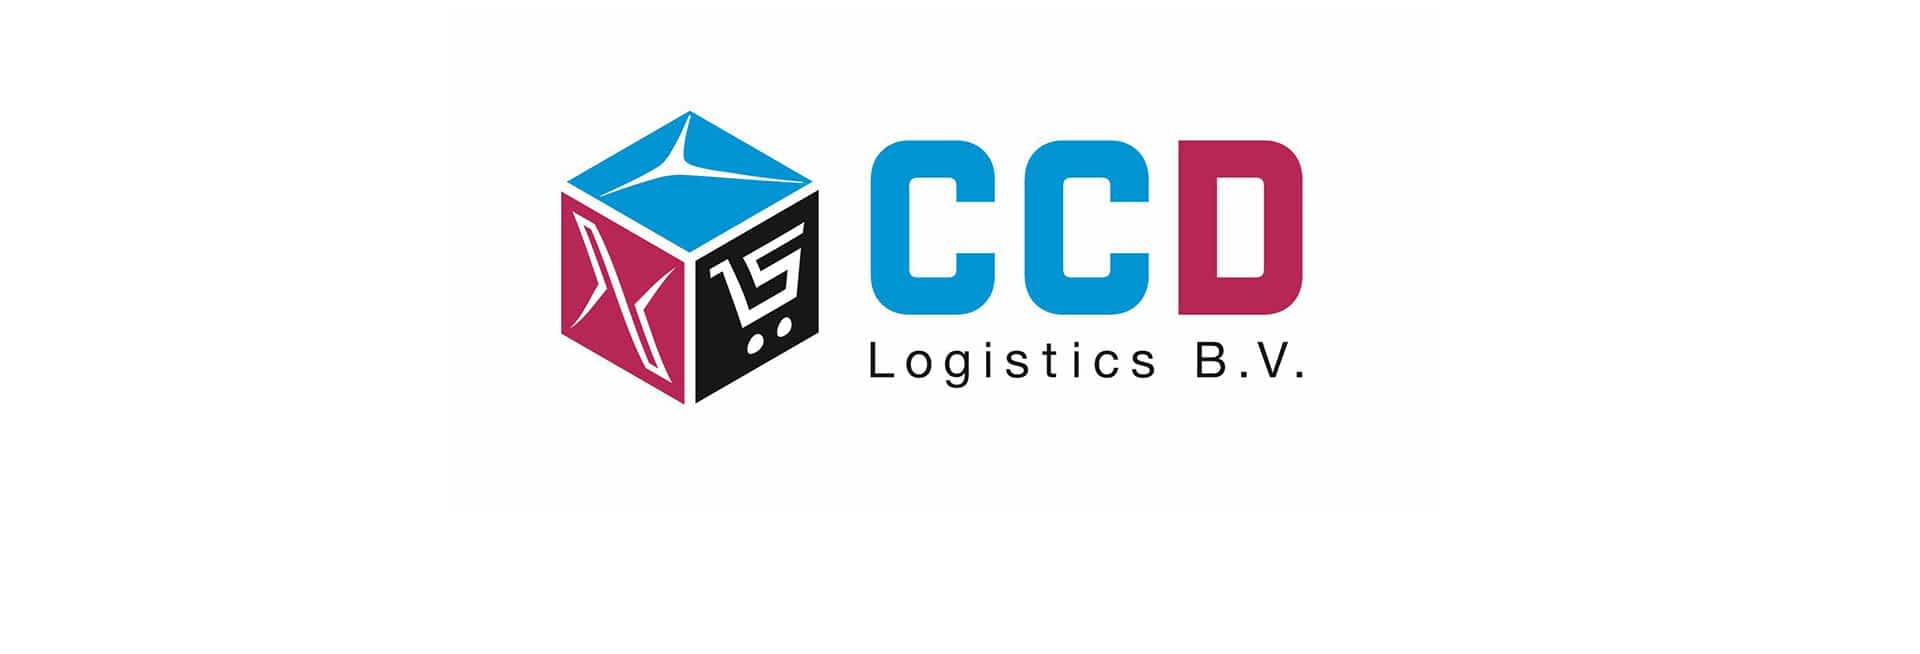 CCD Logistics B.V. Logo 3